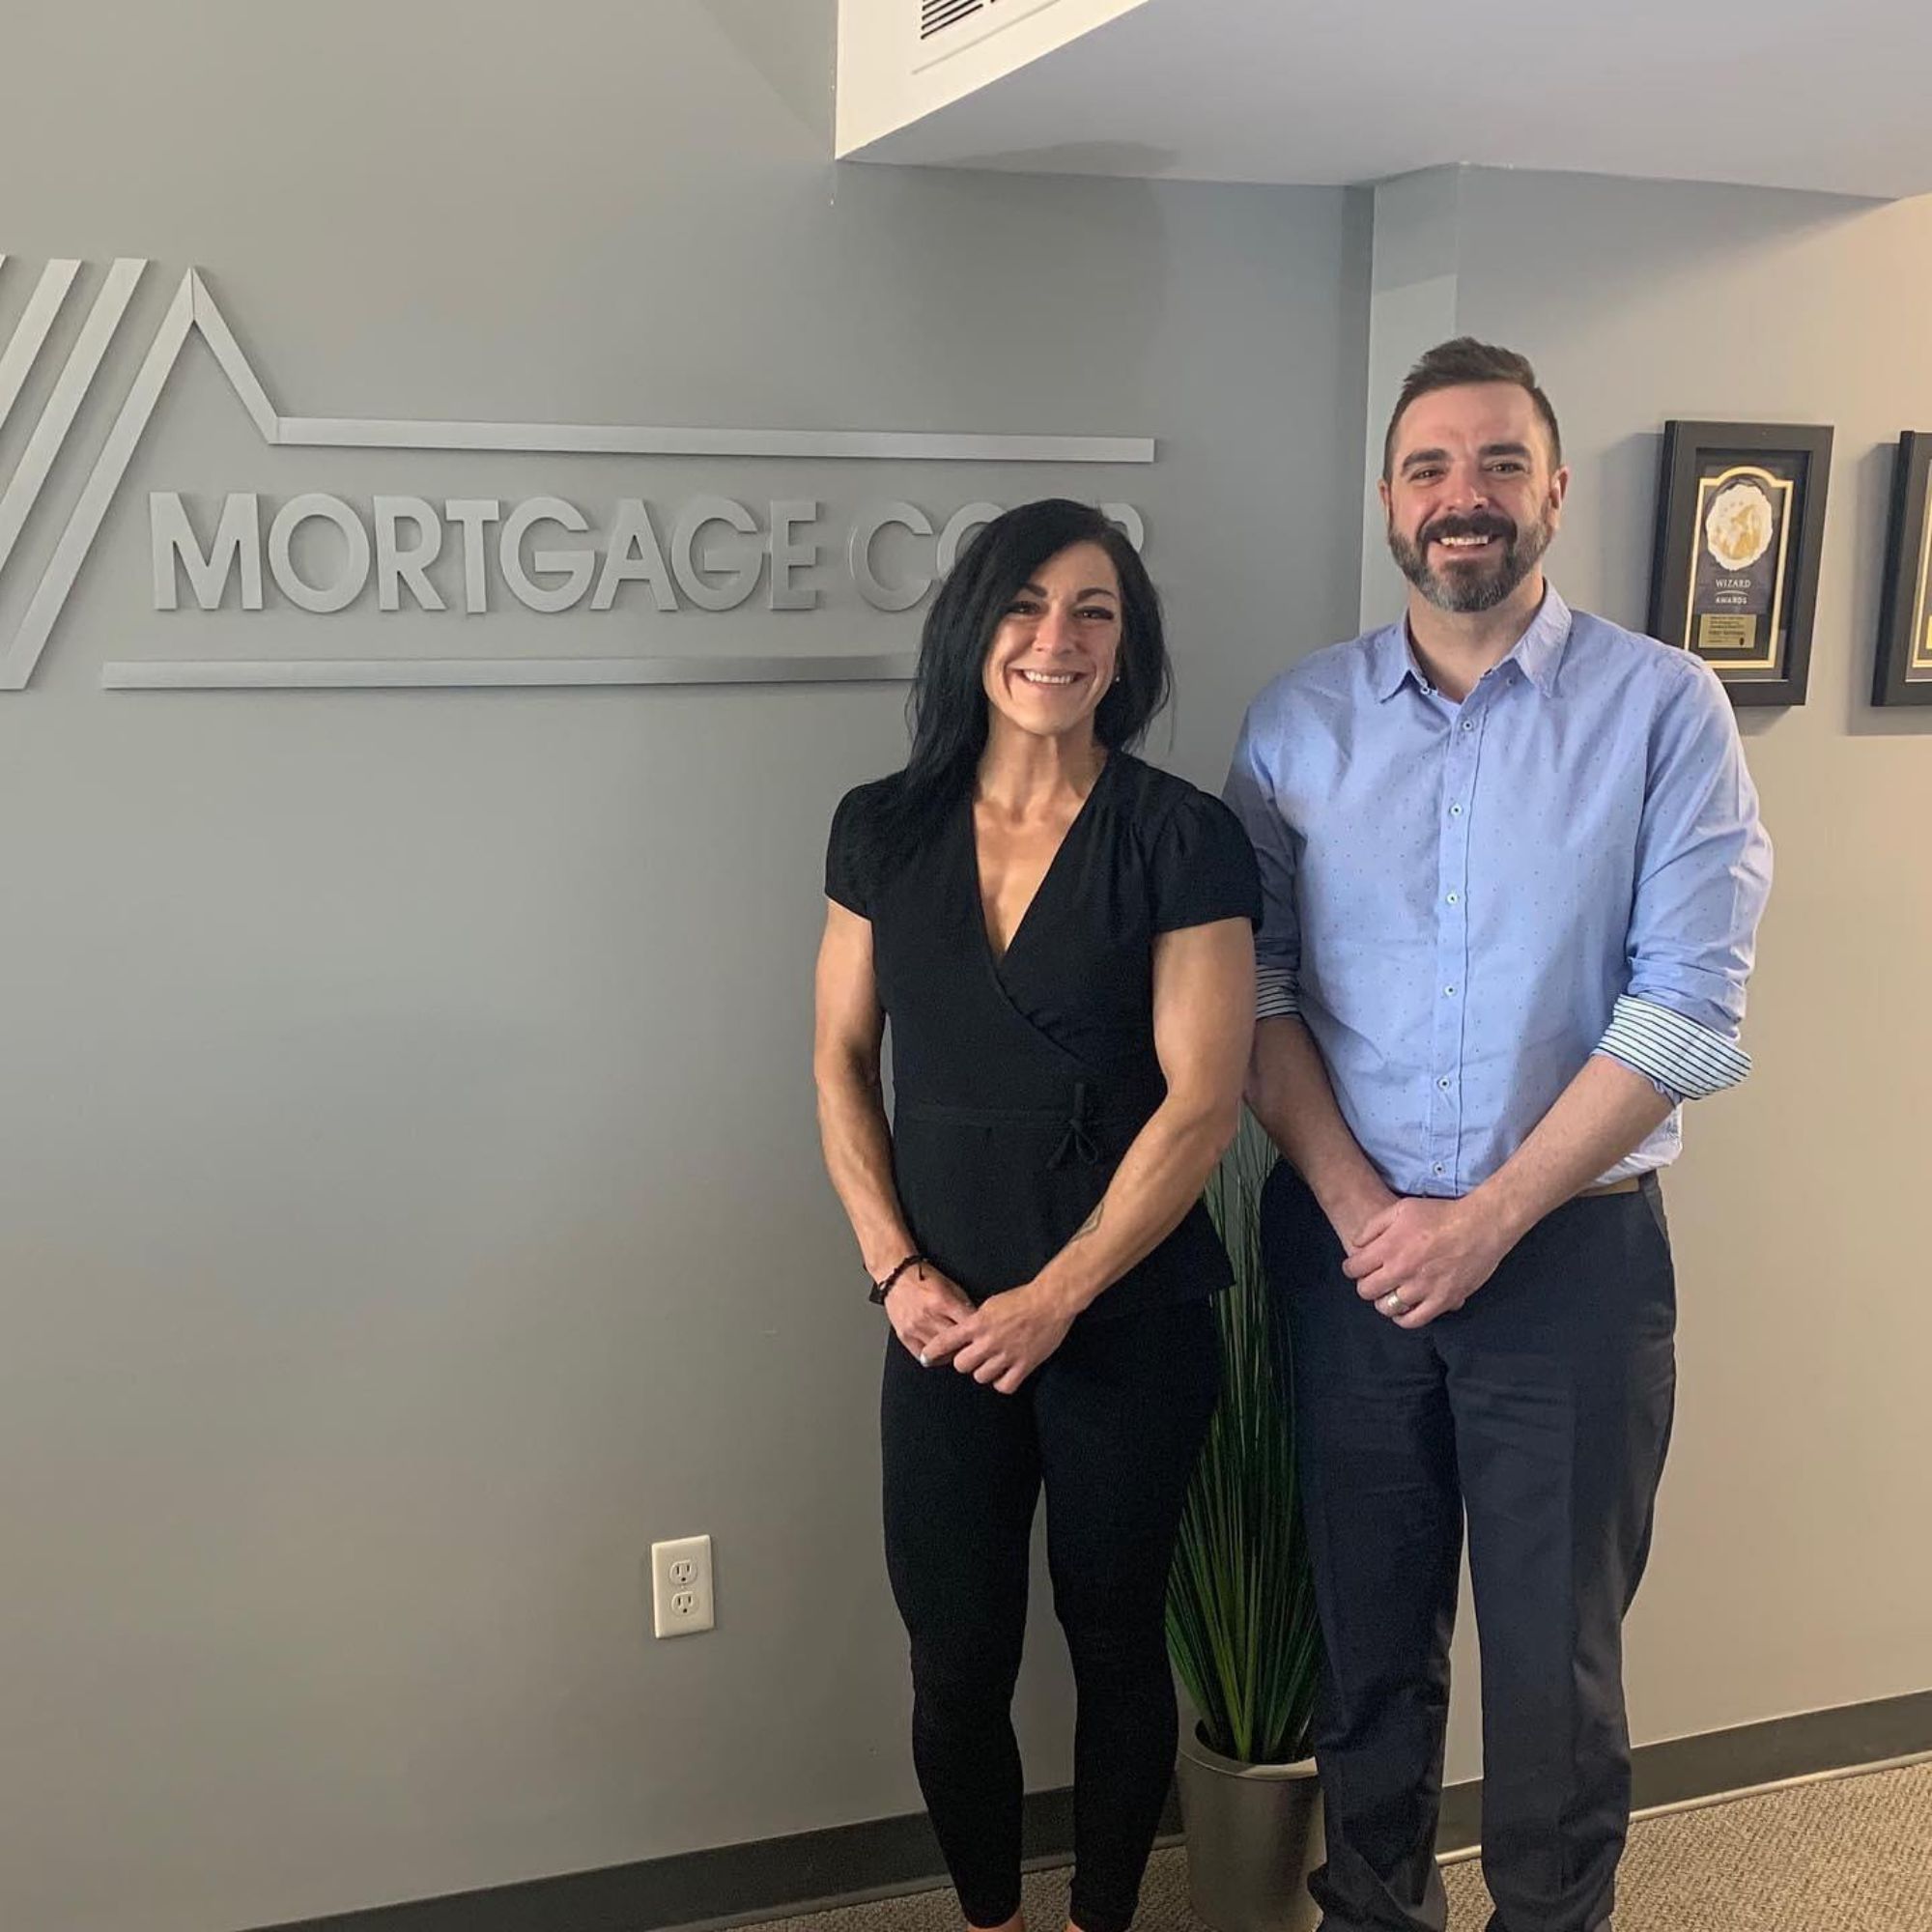 Contact Mortgage Corp North Bay Ontario